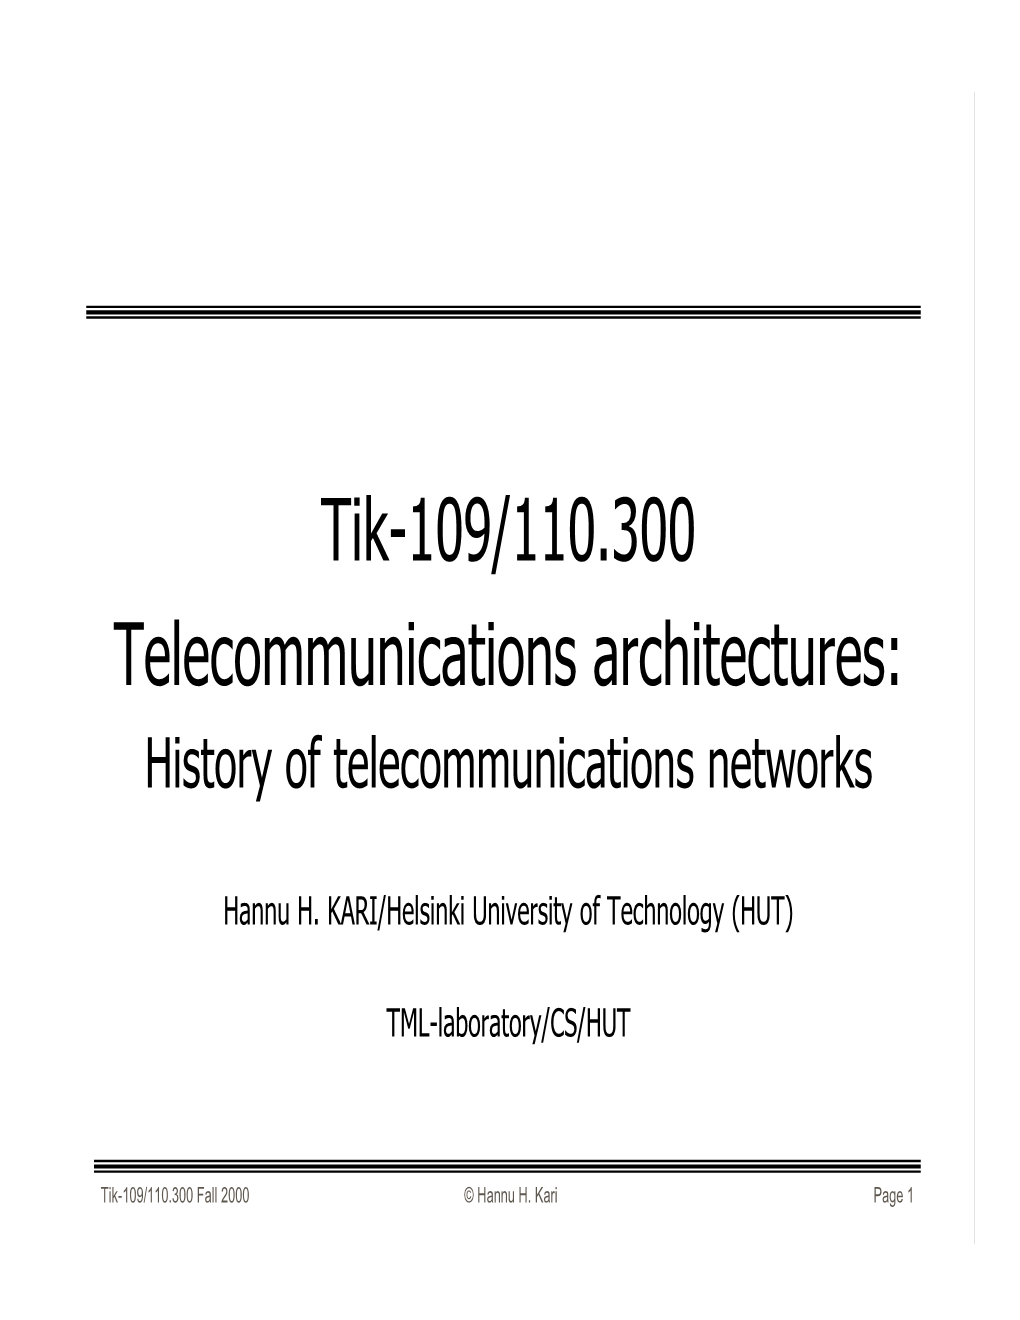 Tik-109/110.300 Telecommunications Architectures: History of Telecommunications Networks